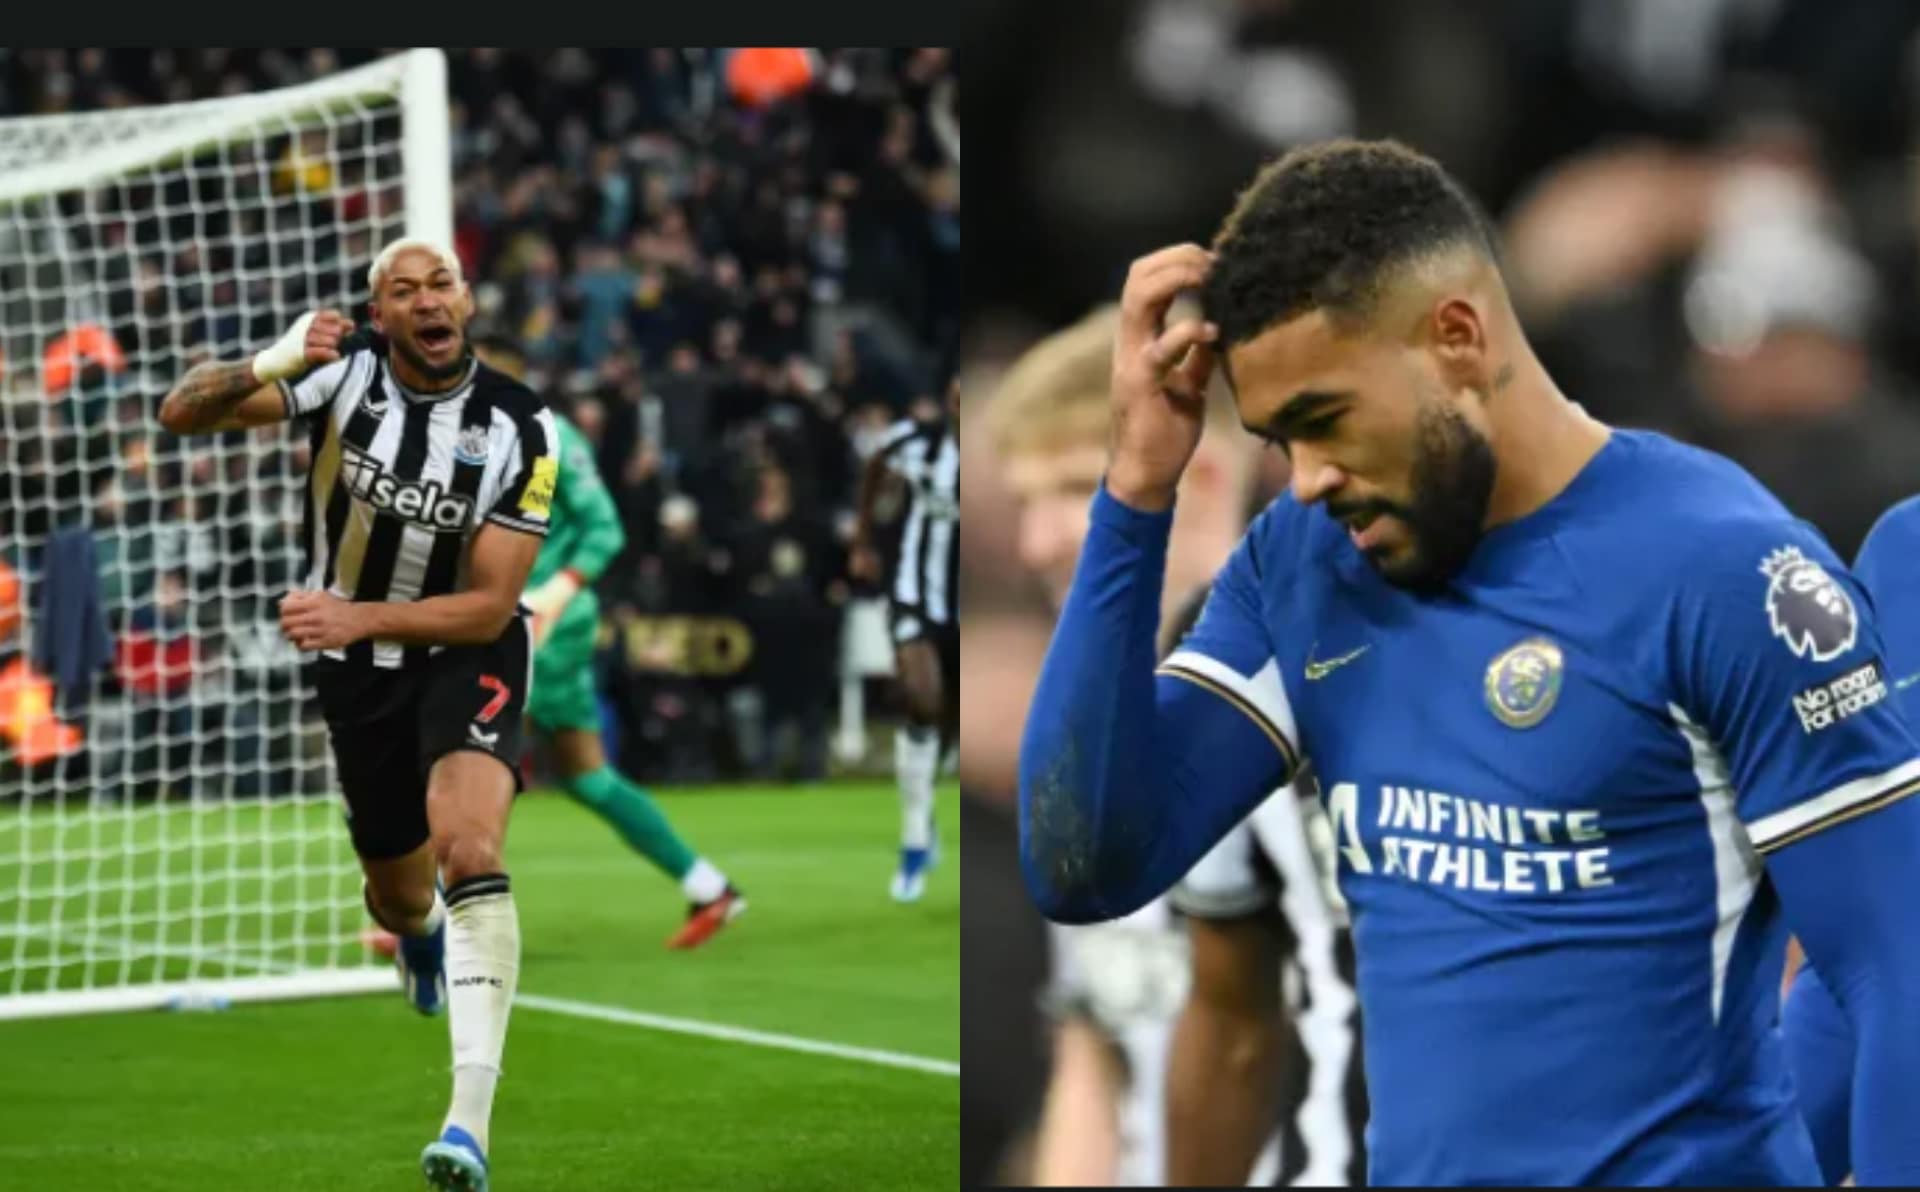 Newcastle stun Chelsea with quickfire goals in 4-1 win